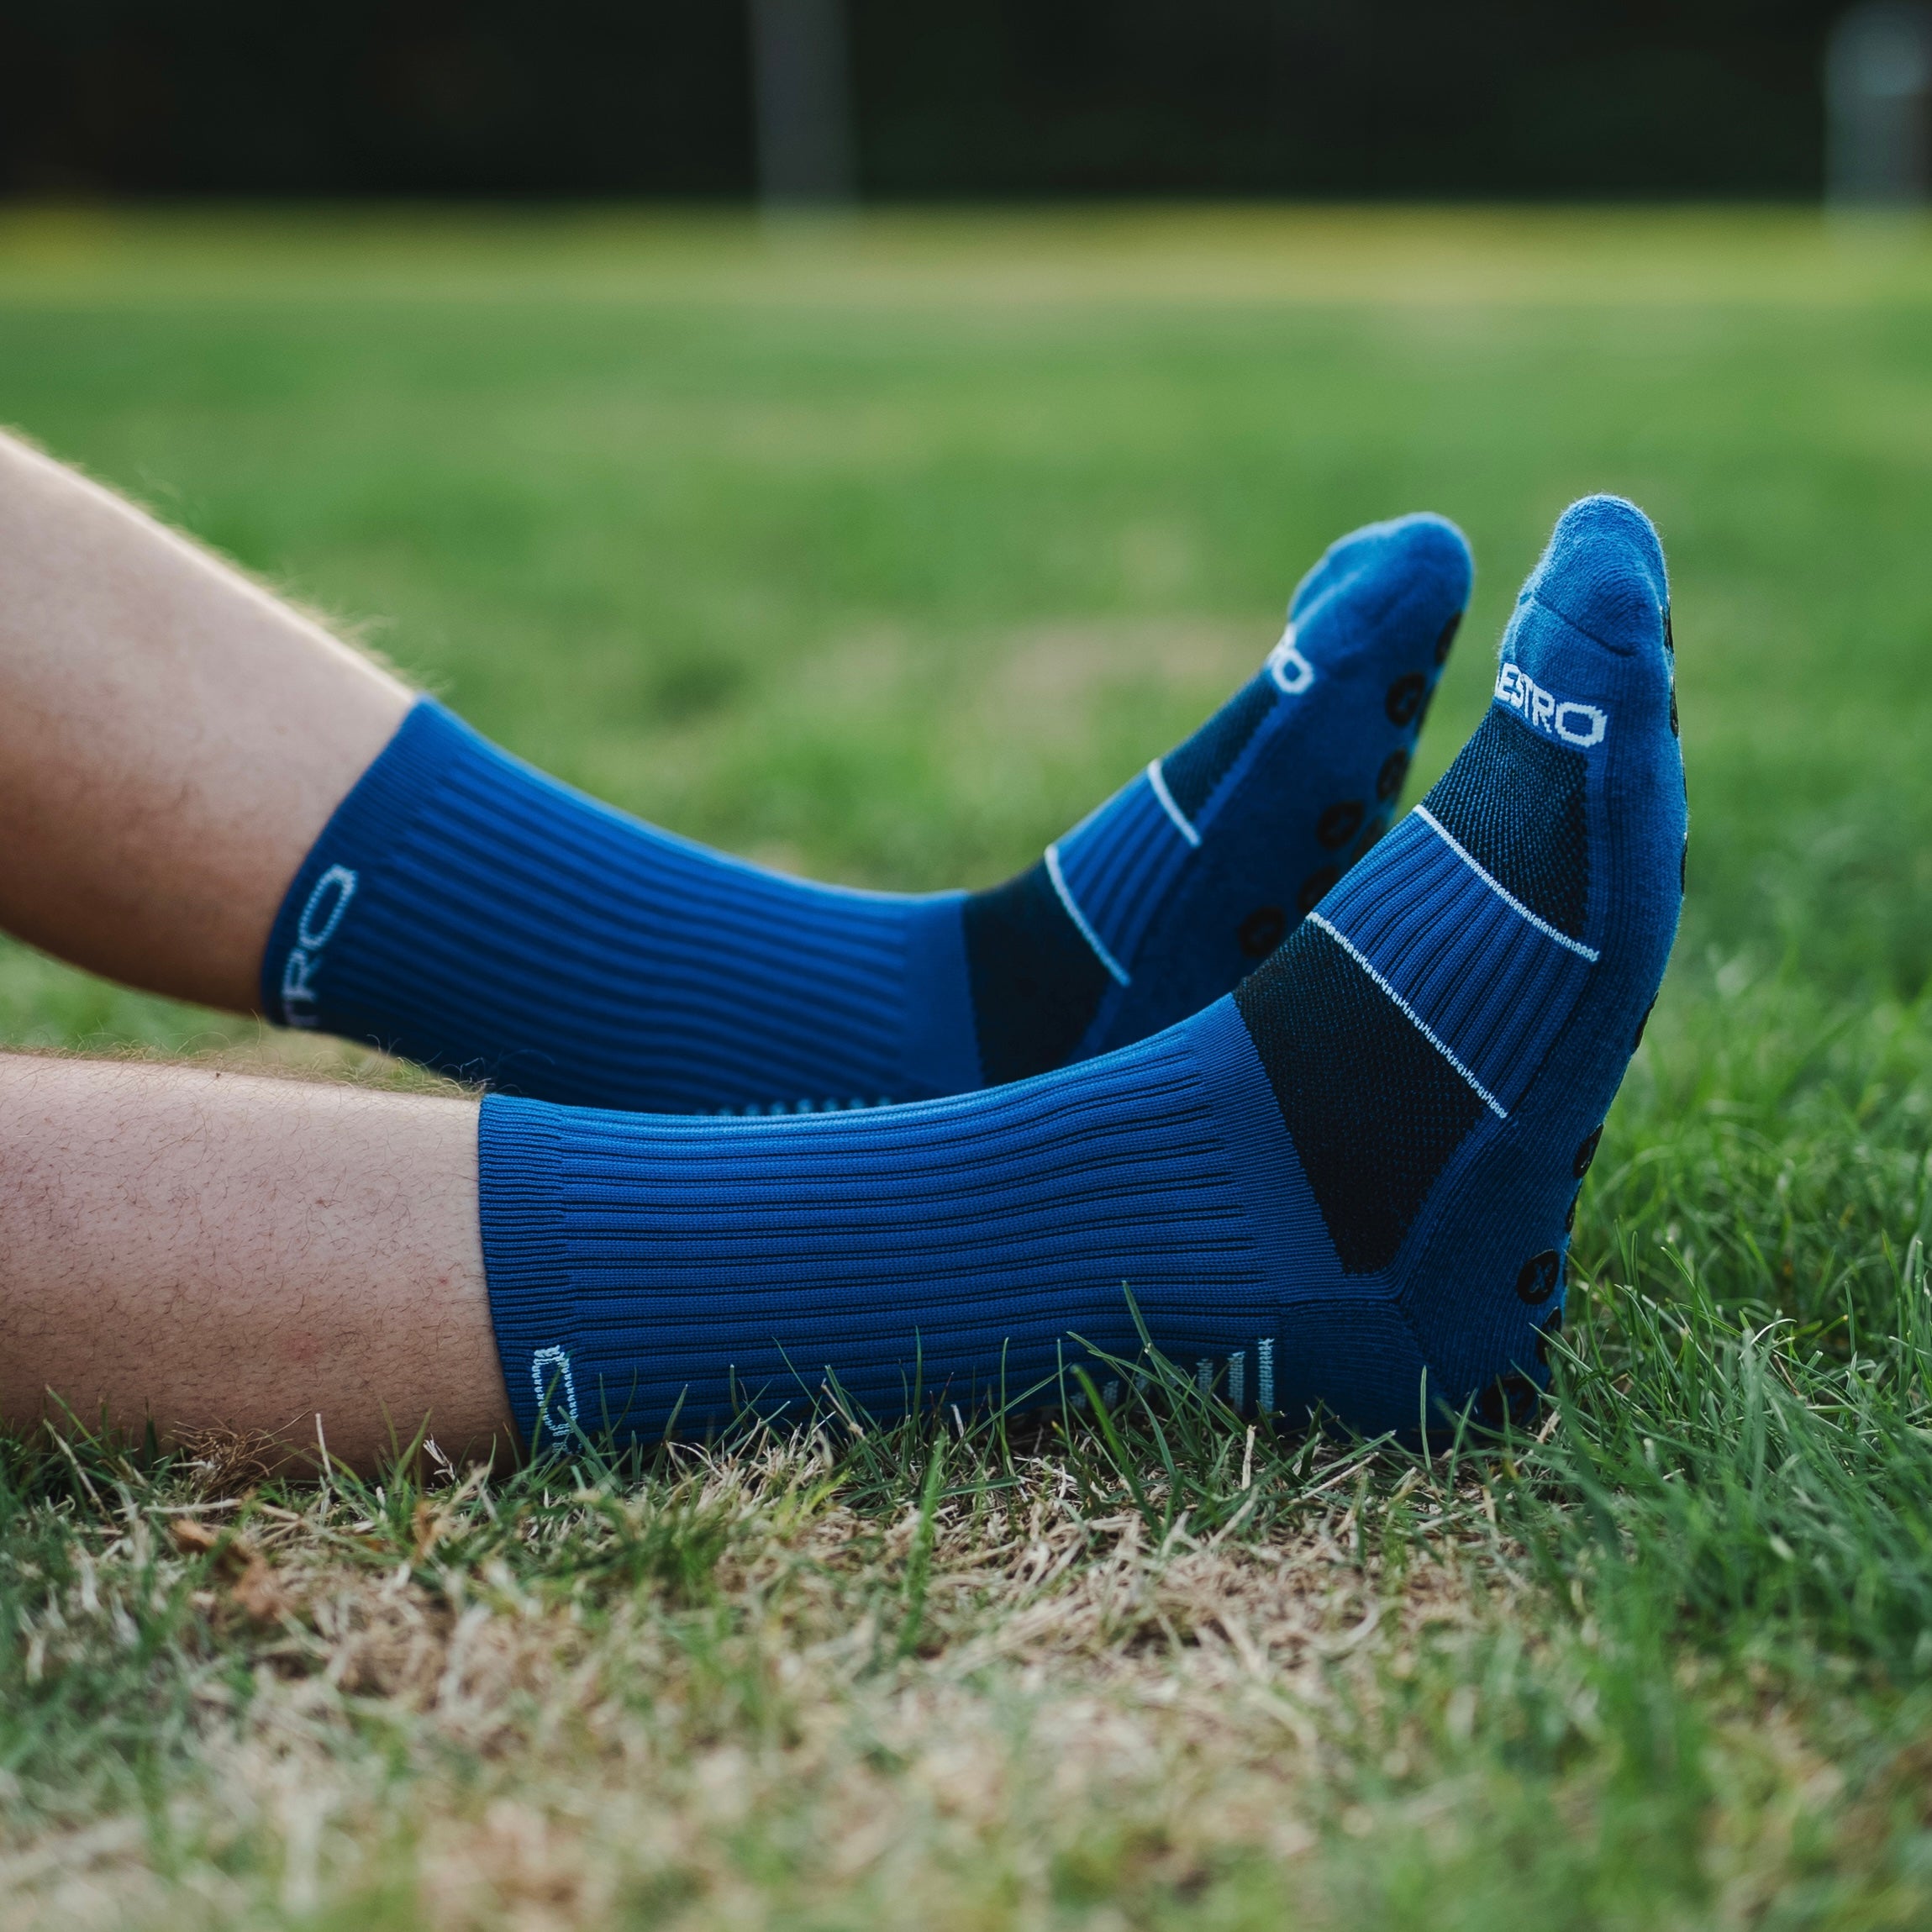 Blue Maestro Grip Socks